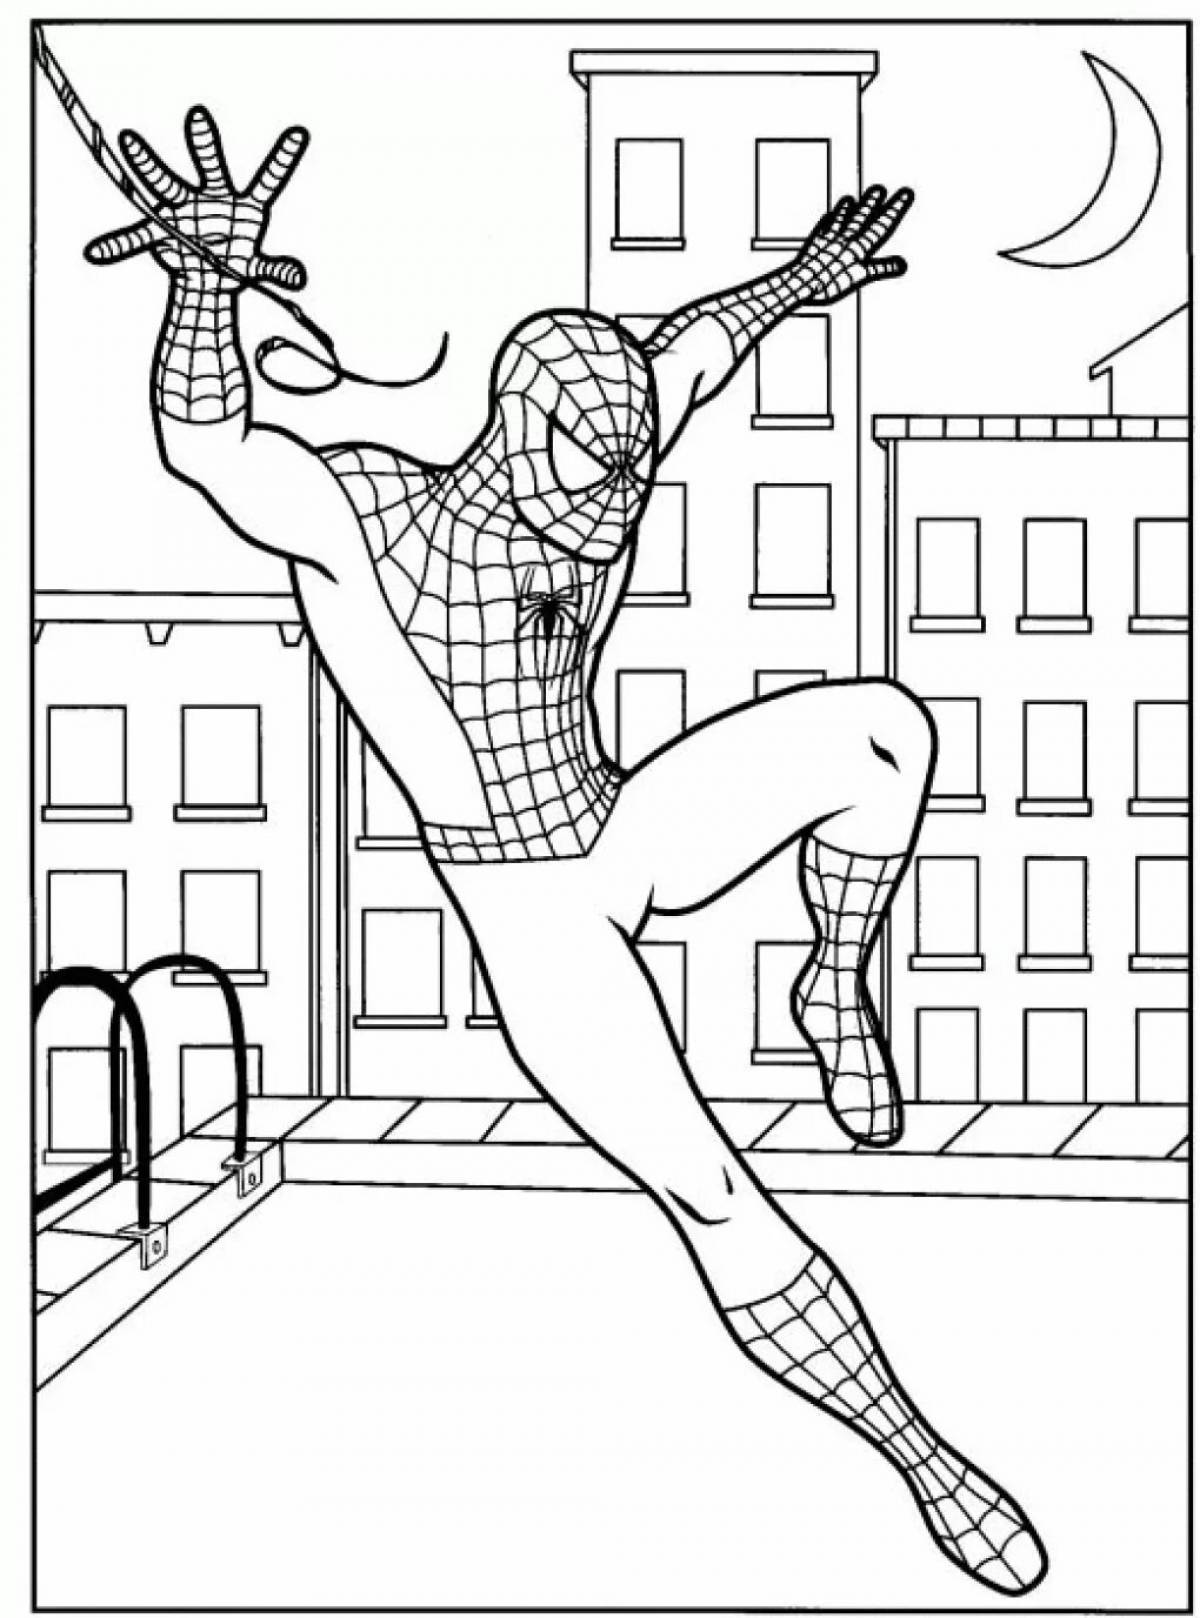 Impressive coloring book of spider-man for kids